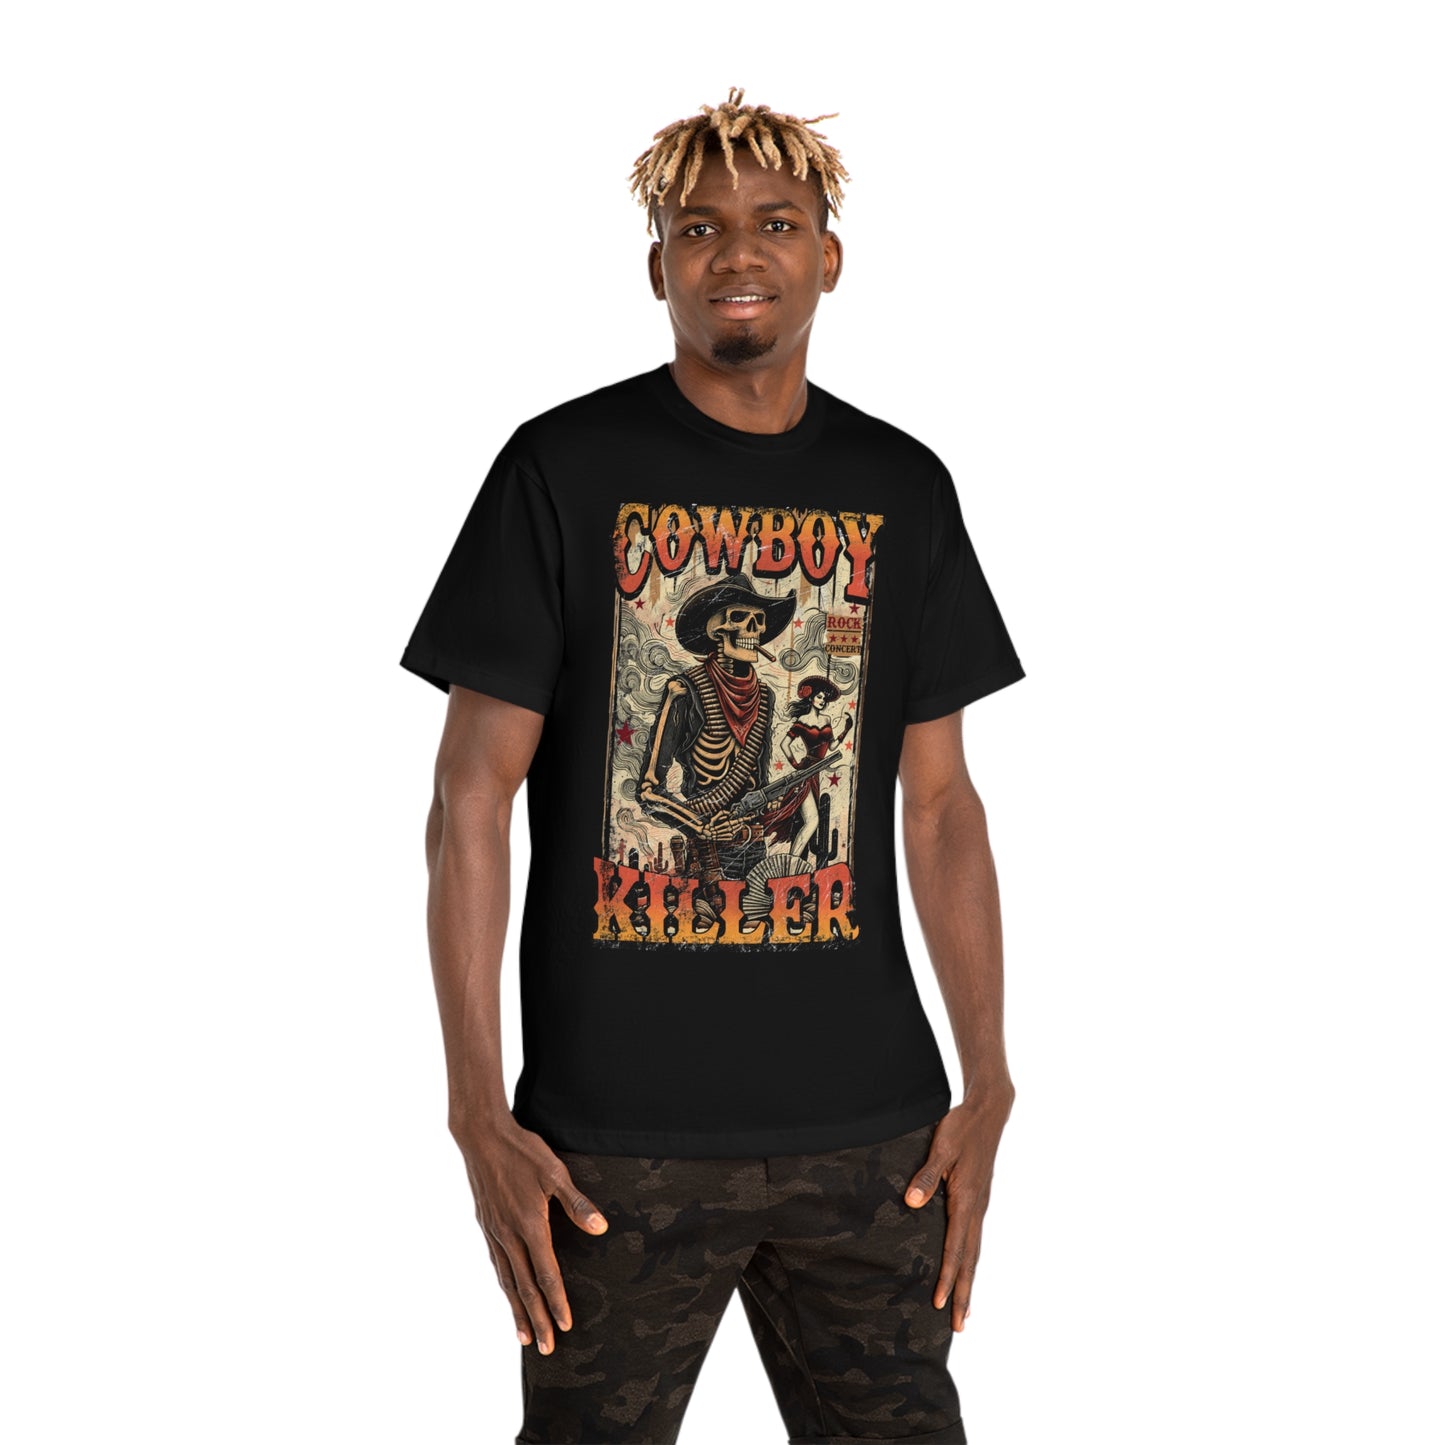 Cowboy Killer Vintage Unisex Hammer™ T-shirt